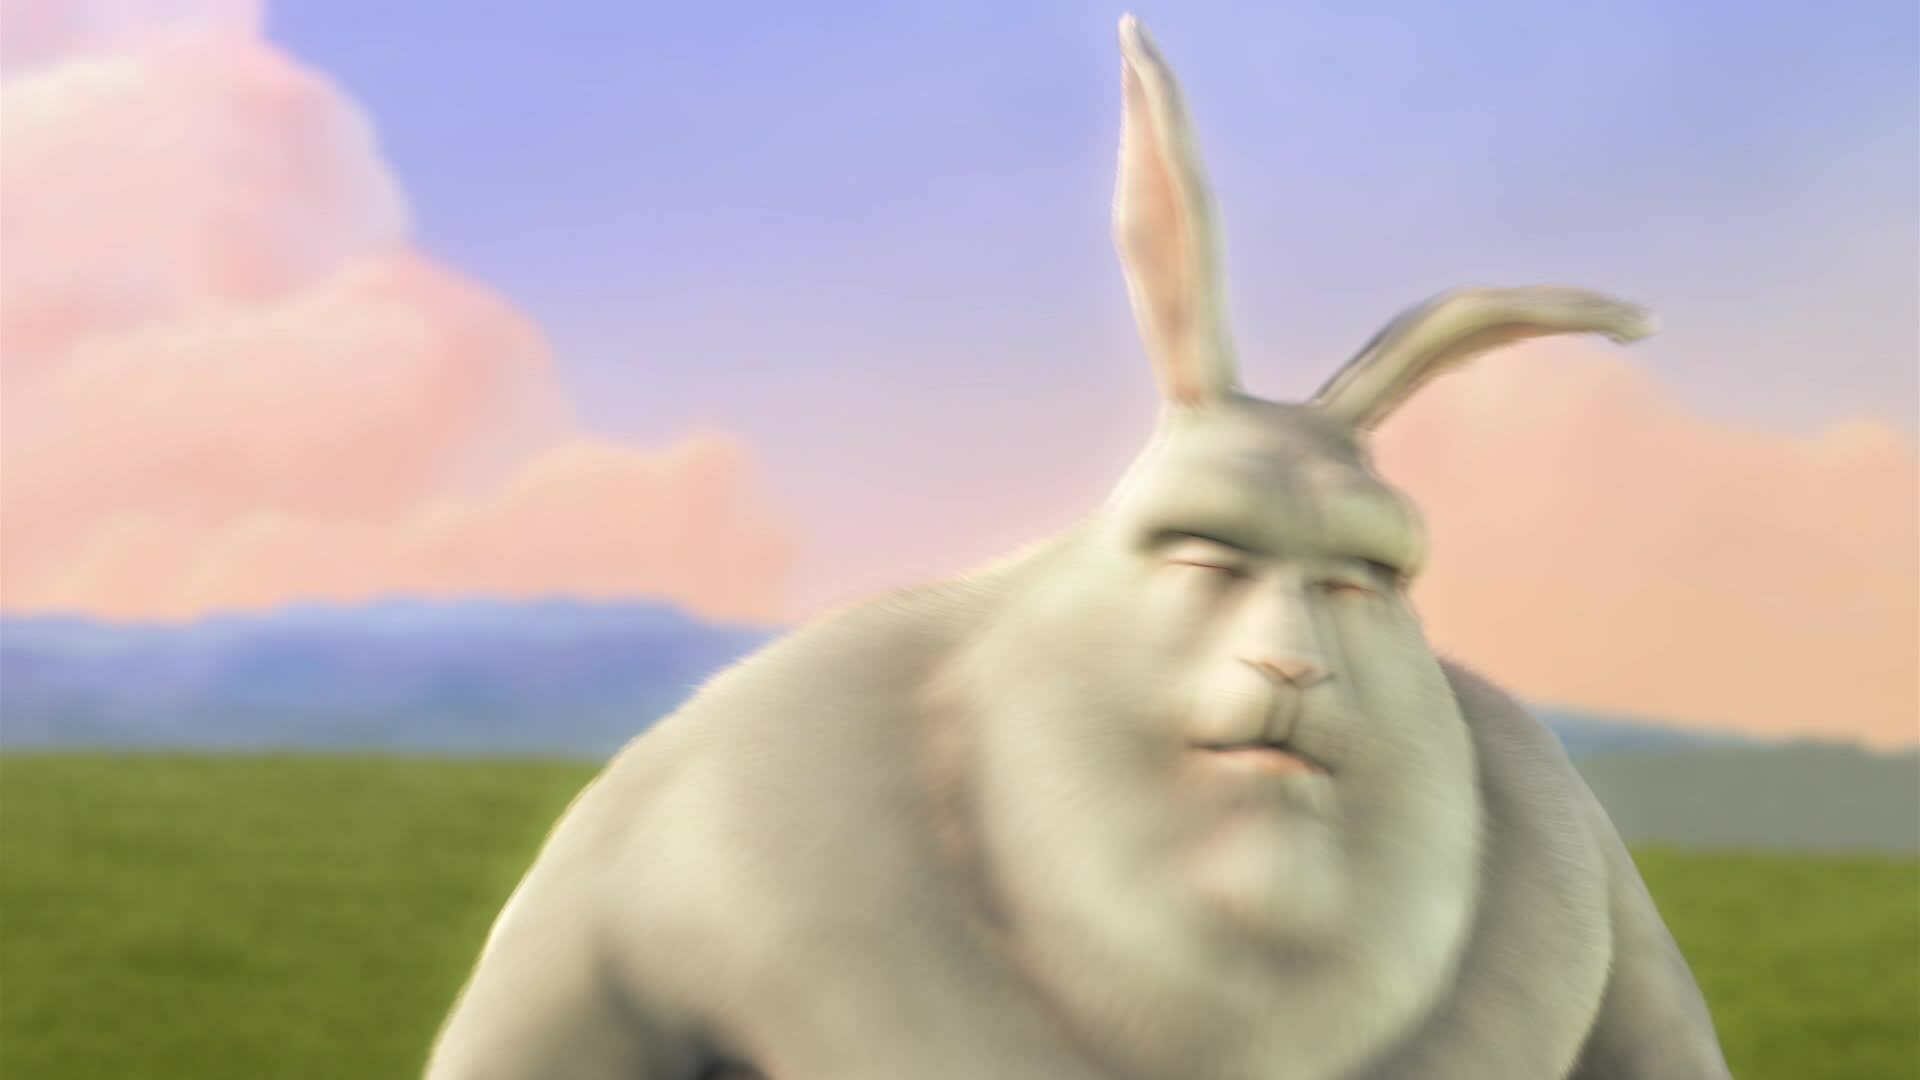 letra hemisferio Prehistórico File:Big Buck Bunny Trailer 1080p.ogv - Wikimedia Commons